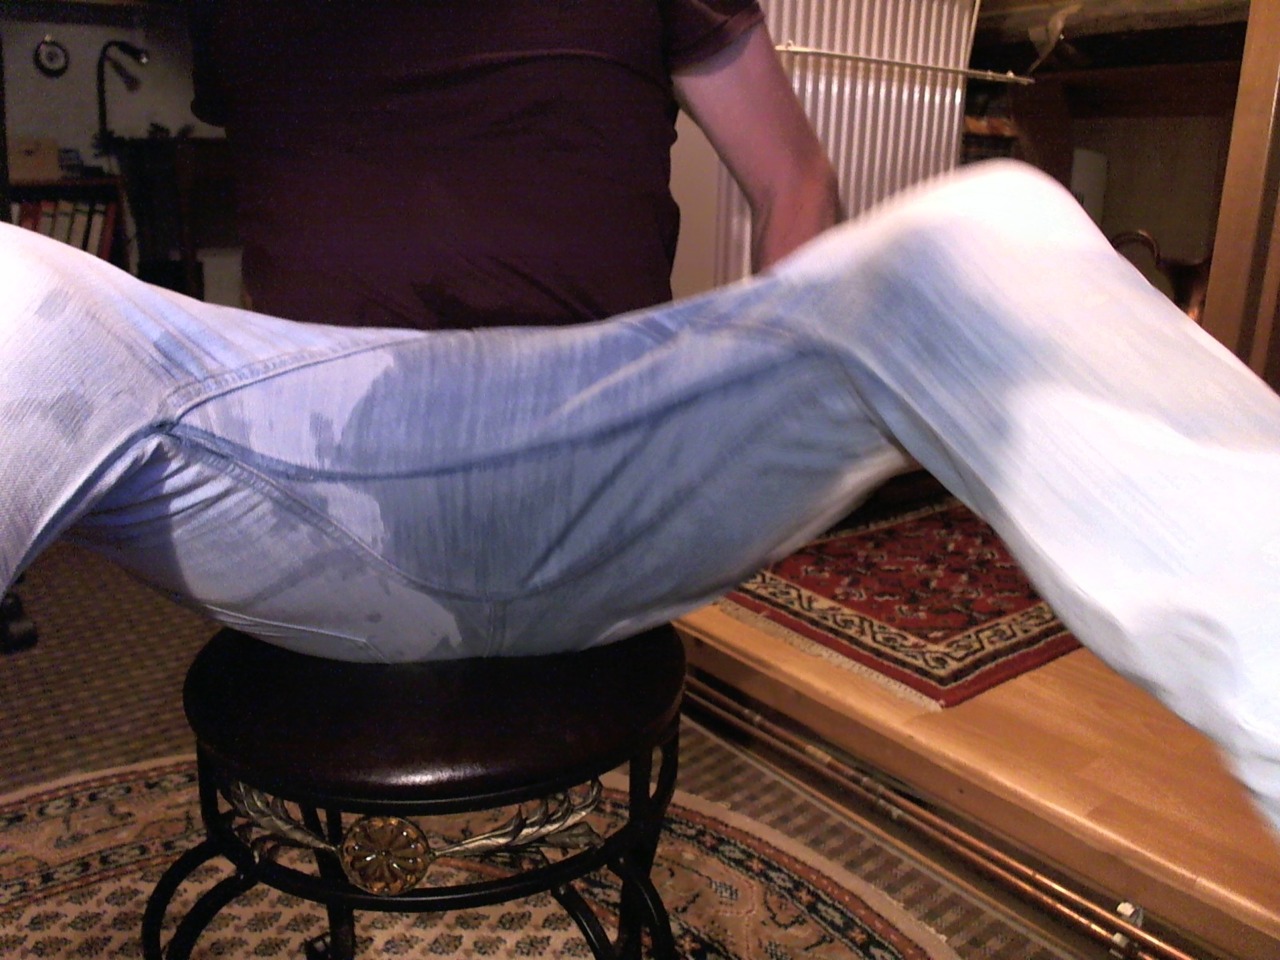 wetjeans6:  sagg piss jeans. 